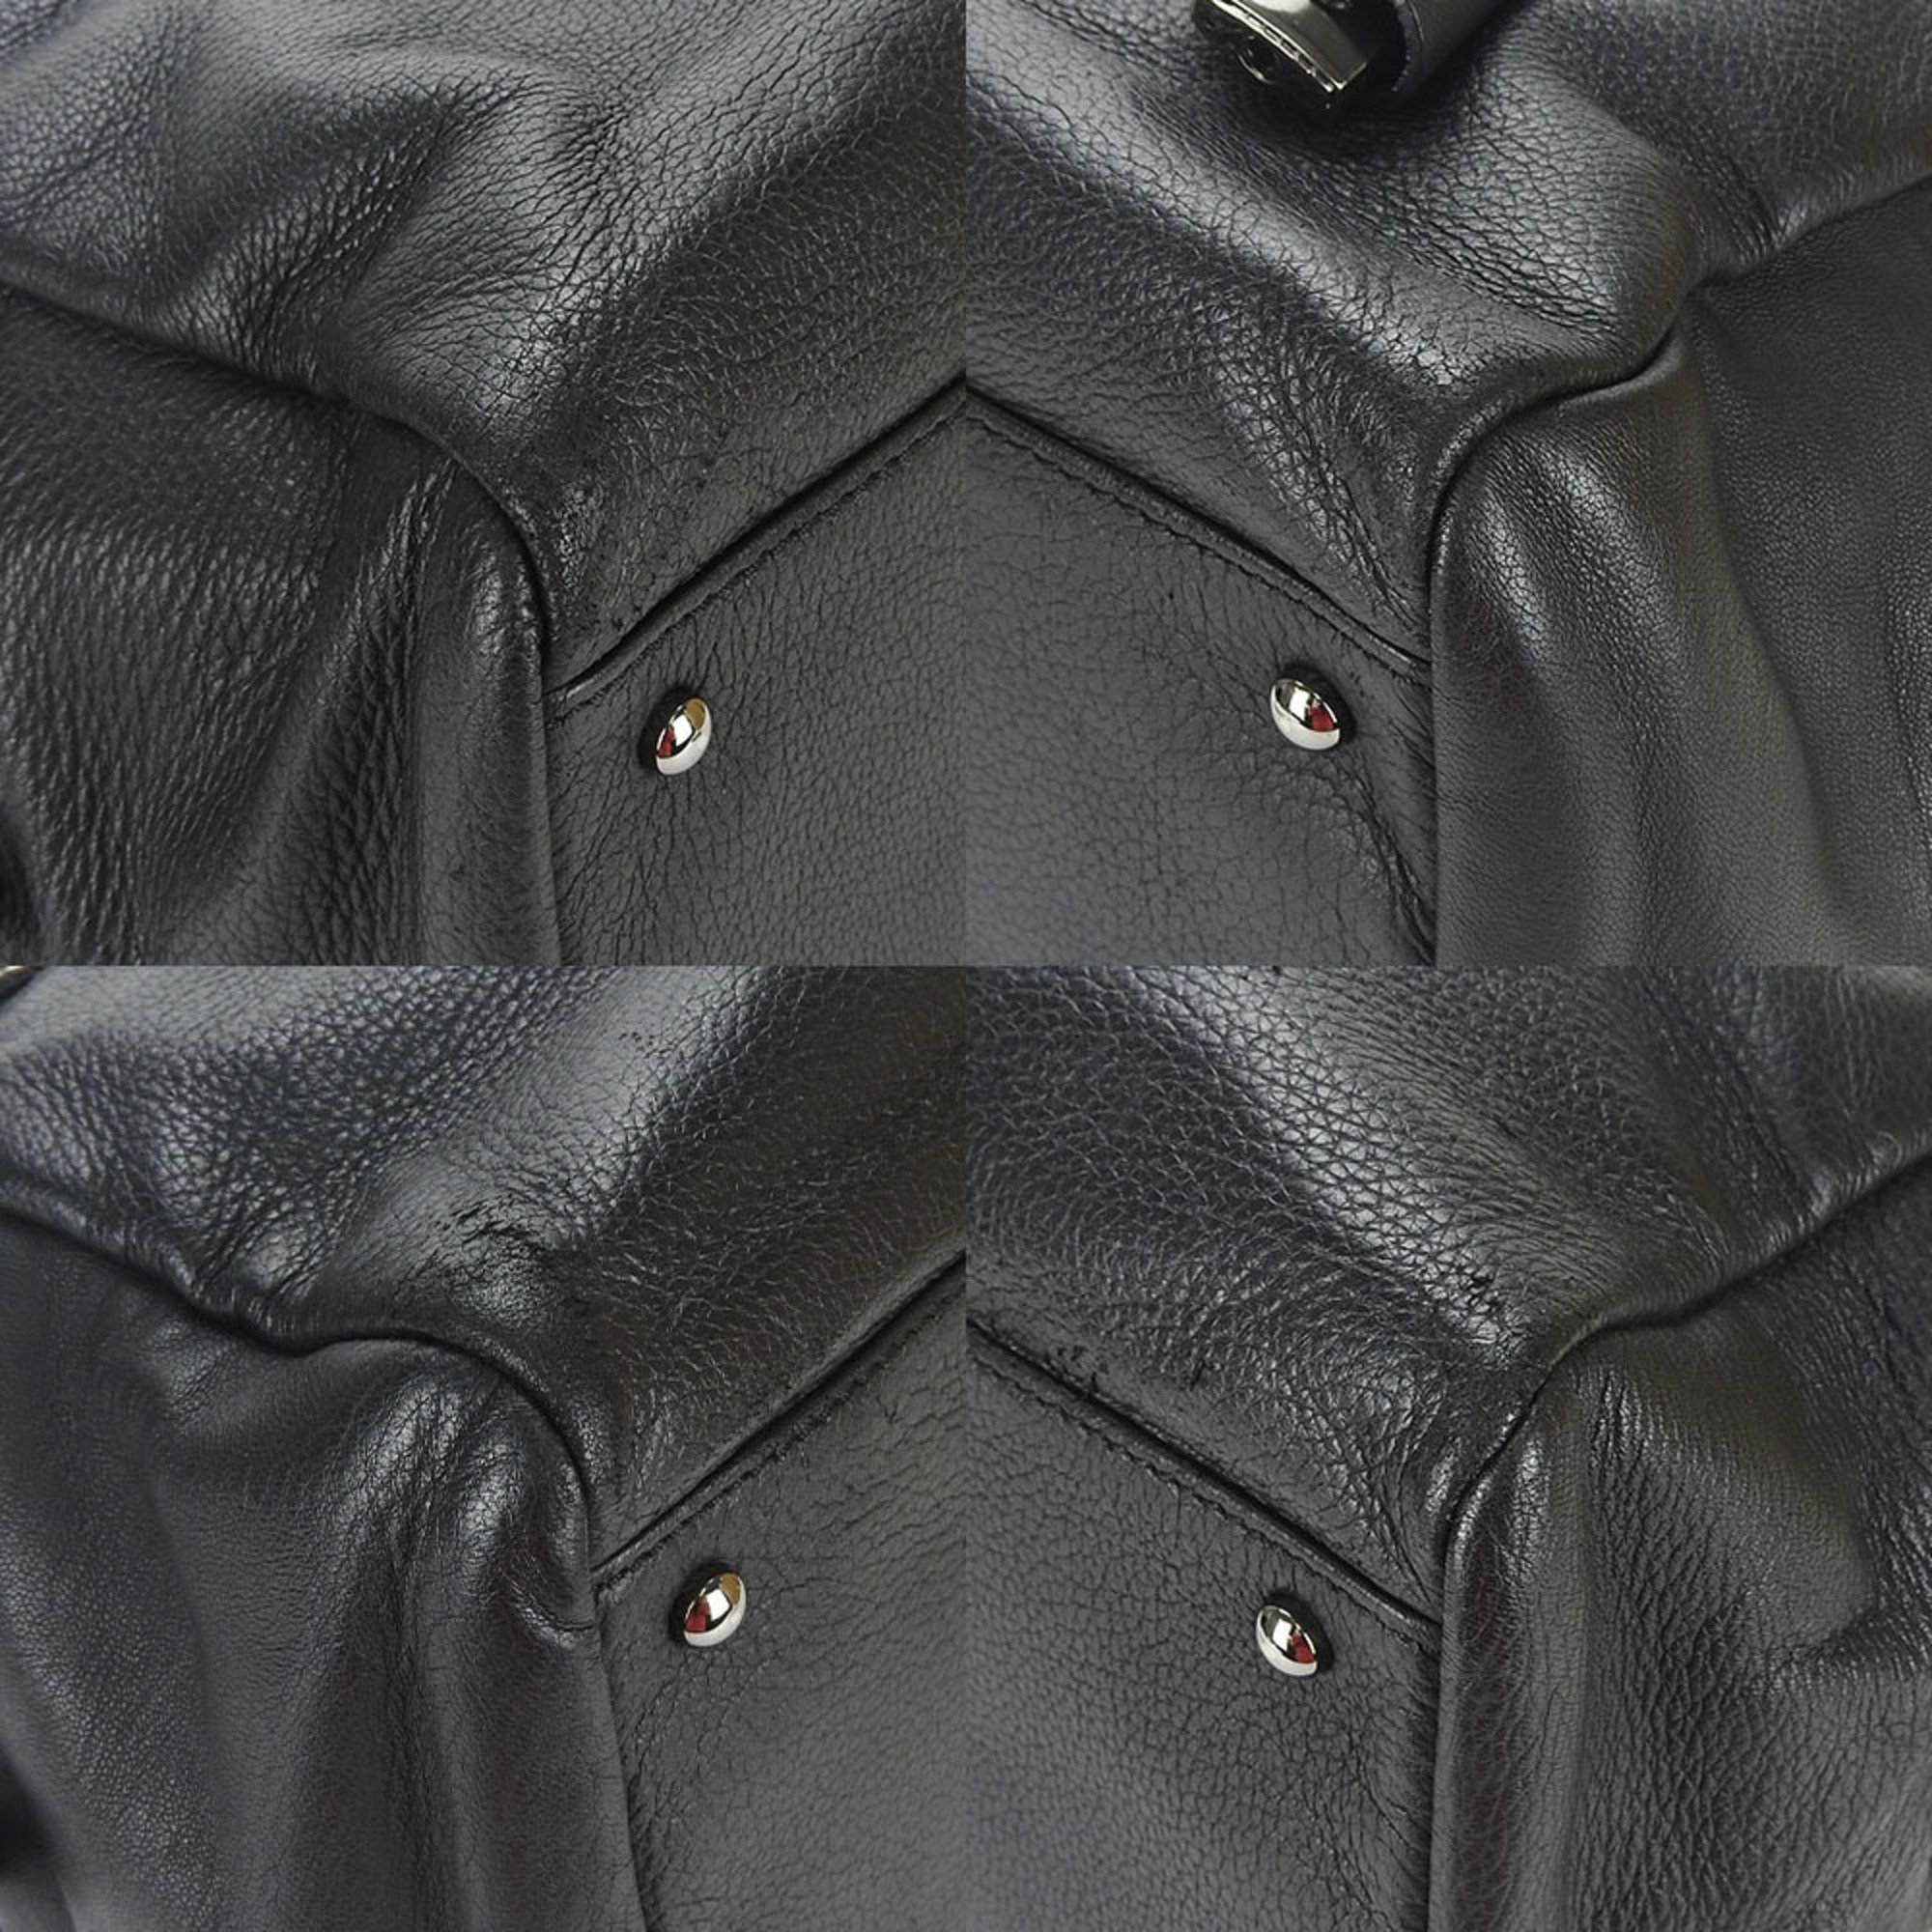 CHANEL chain Boston bag handbag leather black 10 series here mark ladies boston